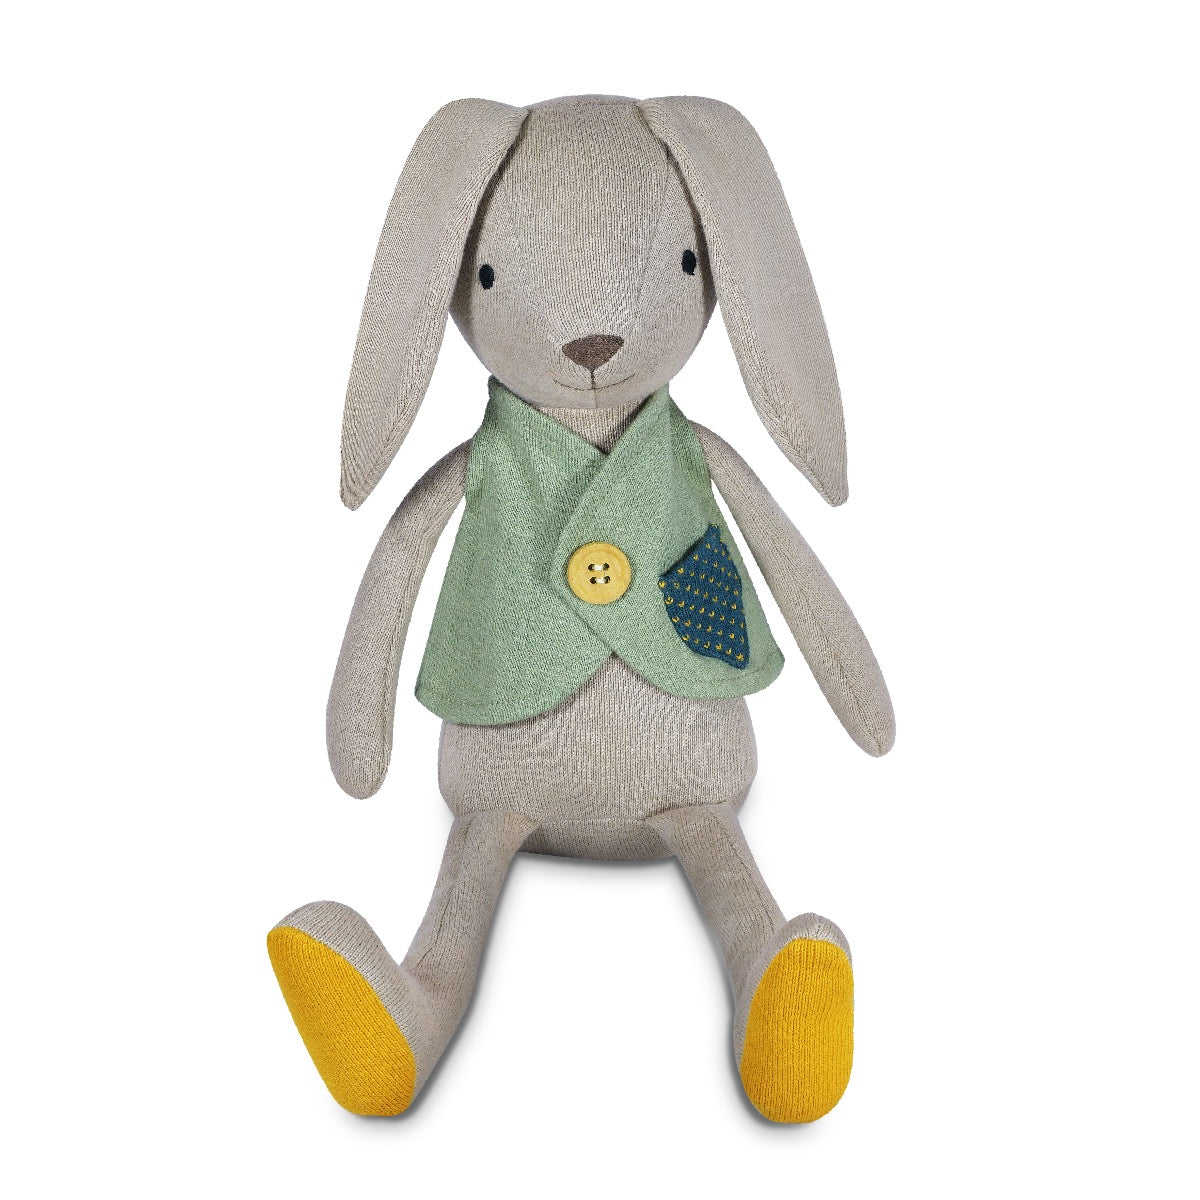 Knit Bunny Plush - Luca